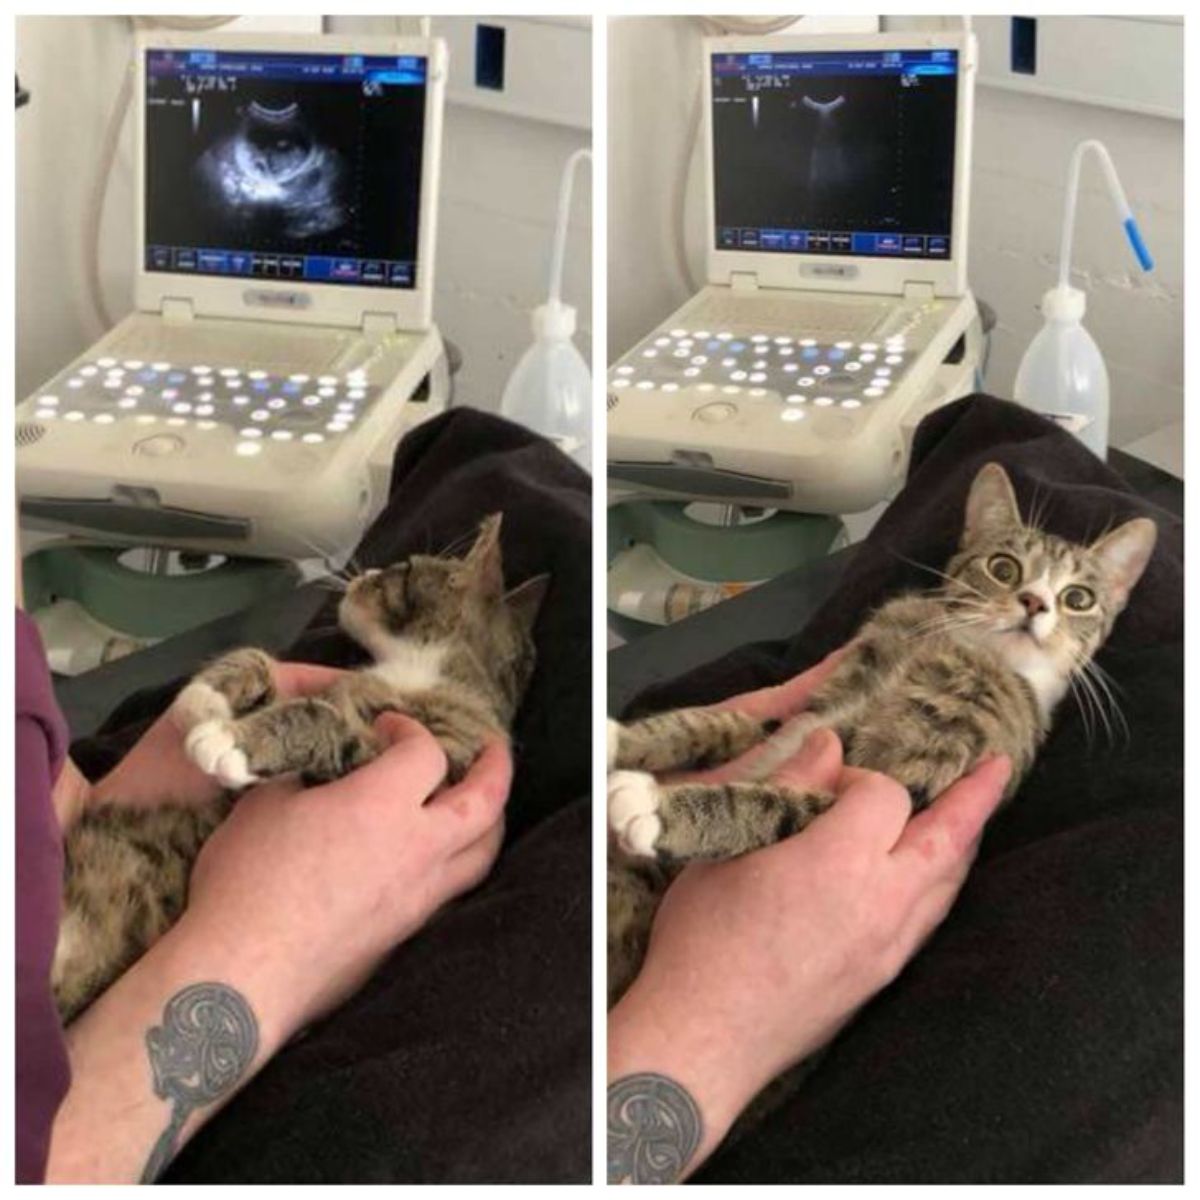 2 photos of a tabby cat getting an ultrasound